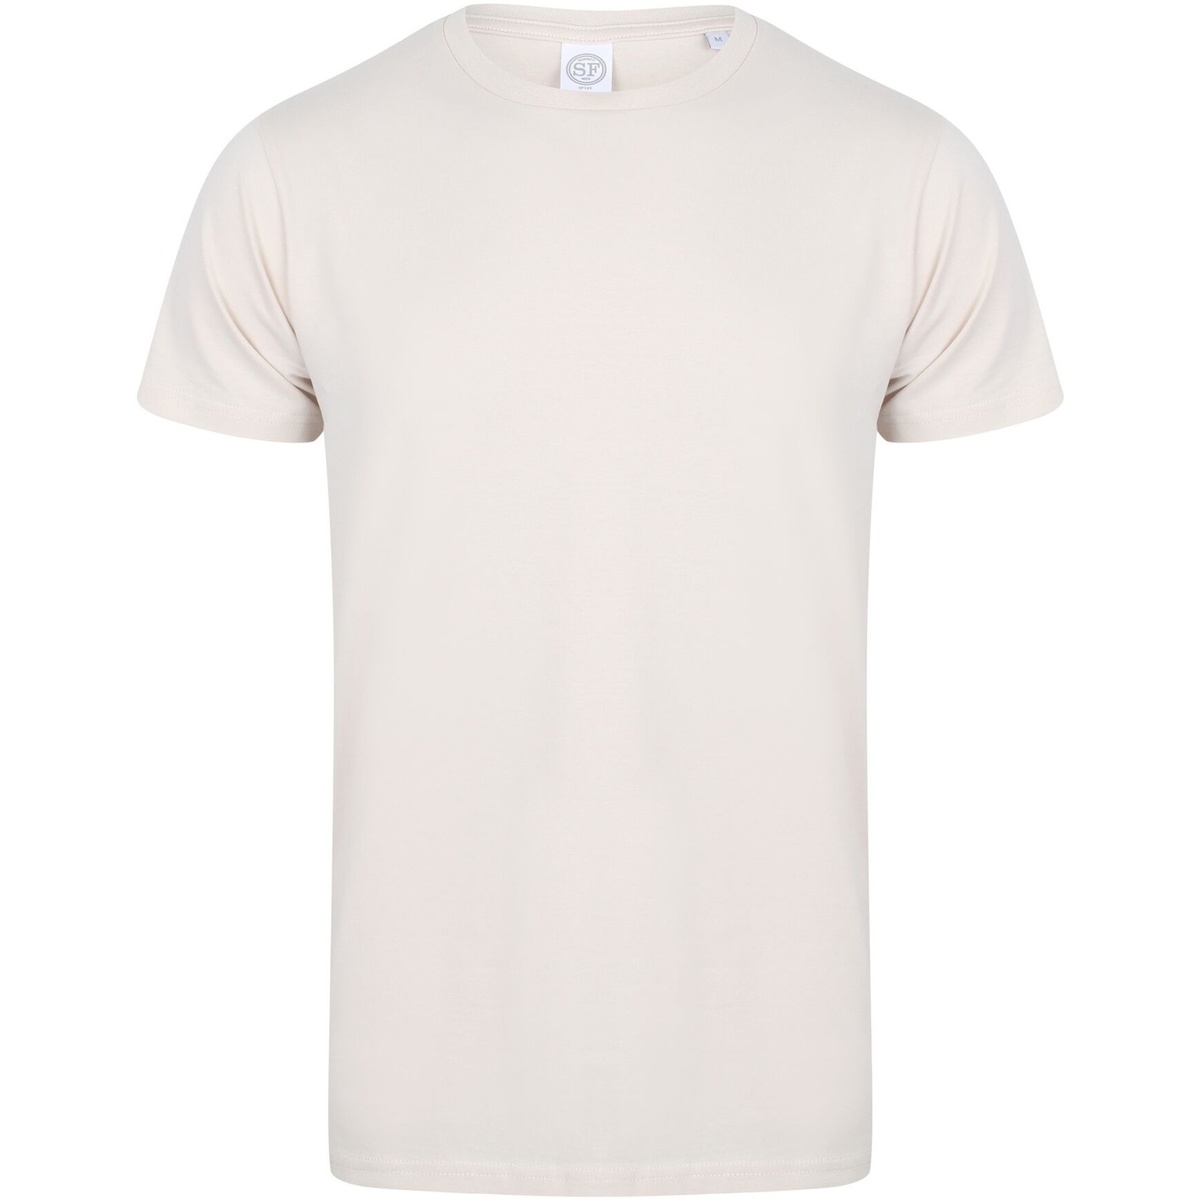 Vêtements Homme T-shirts manches courtes Skinni Fit SF121 Blanc